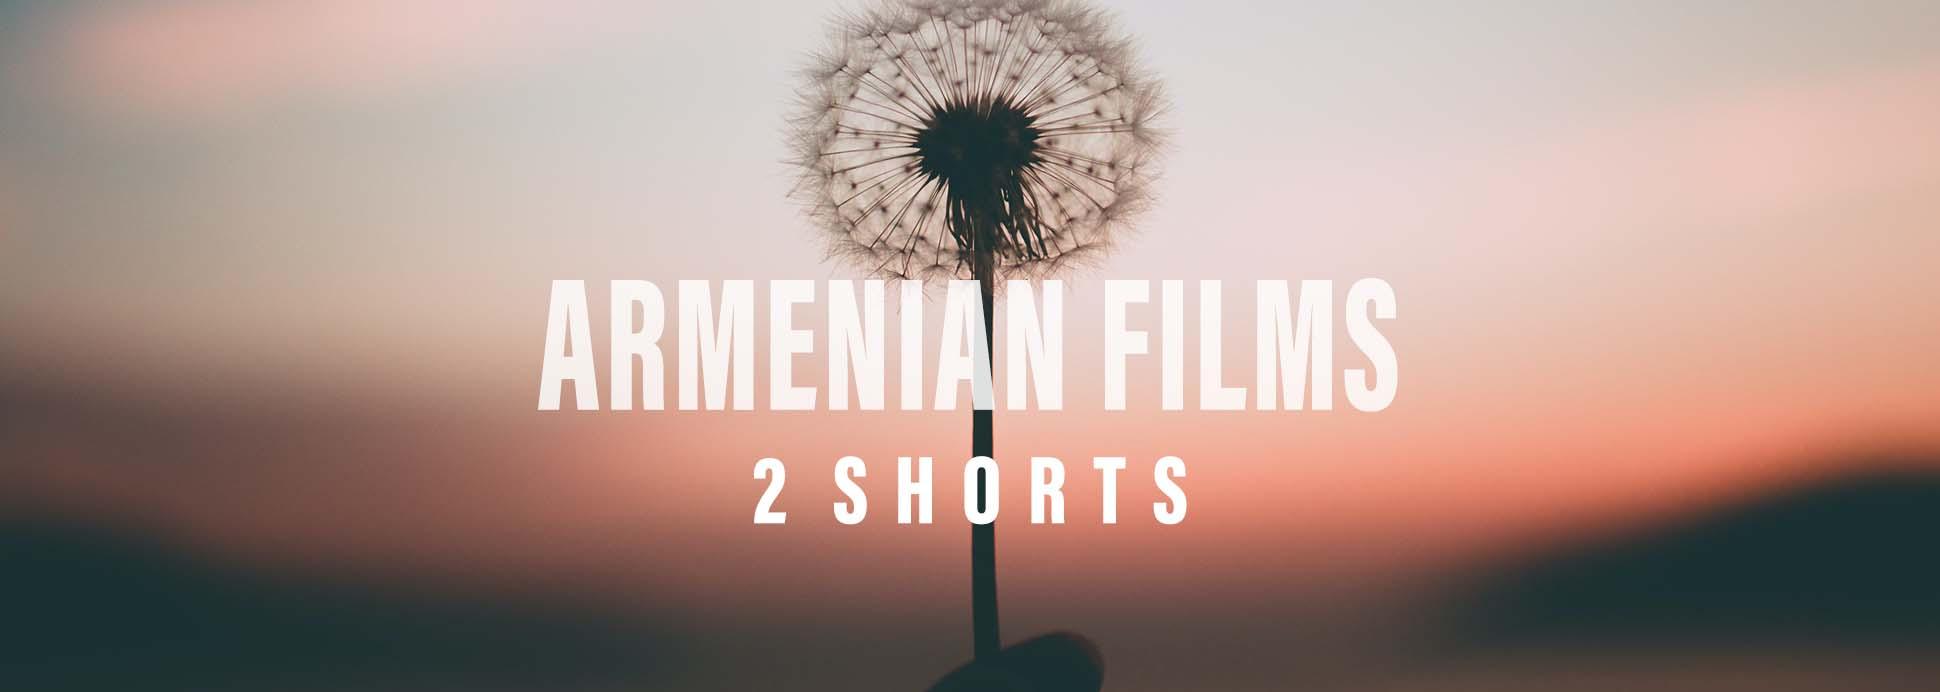 Armenian Films